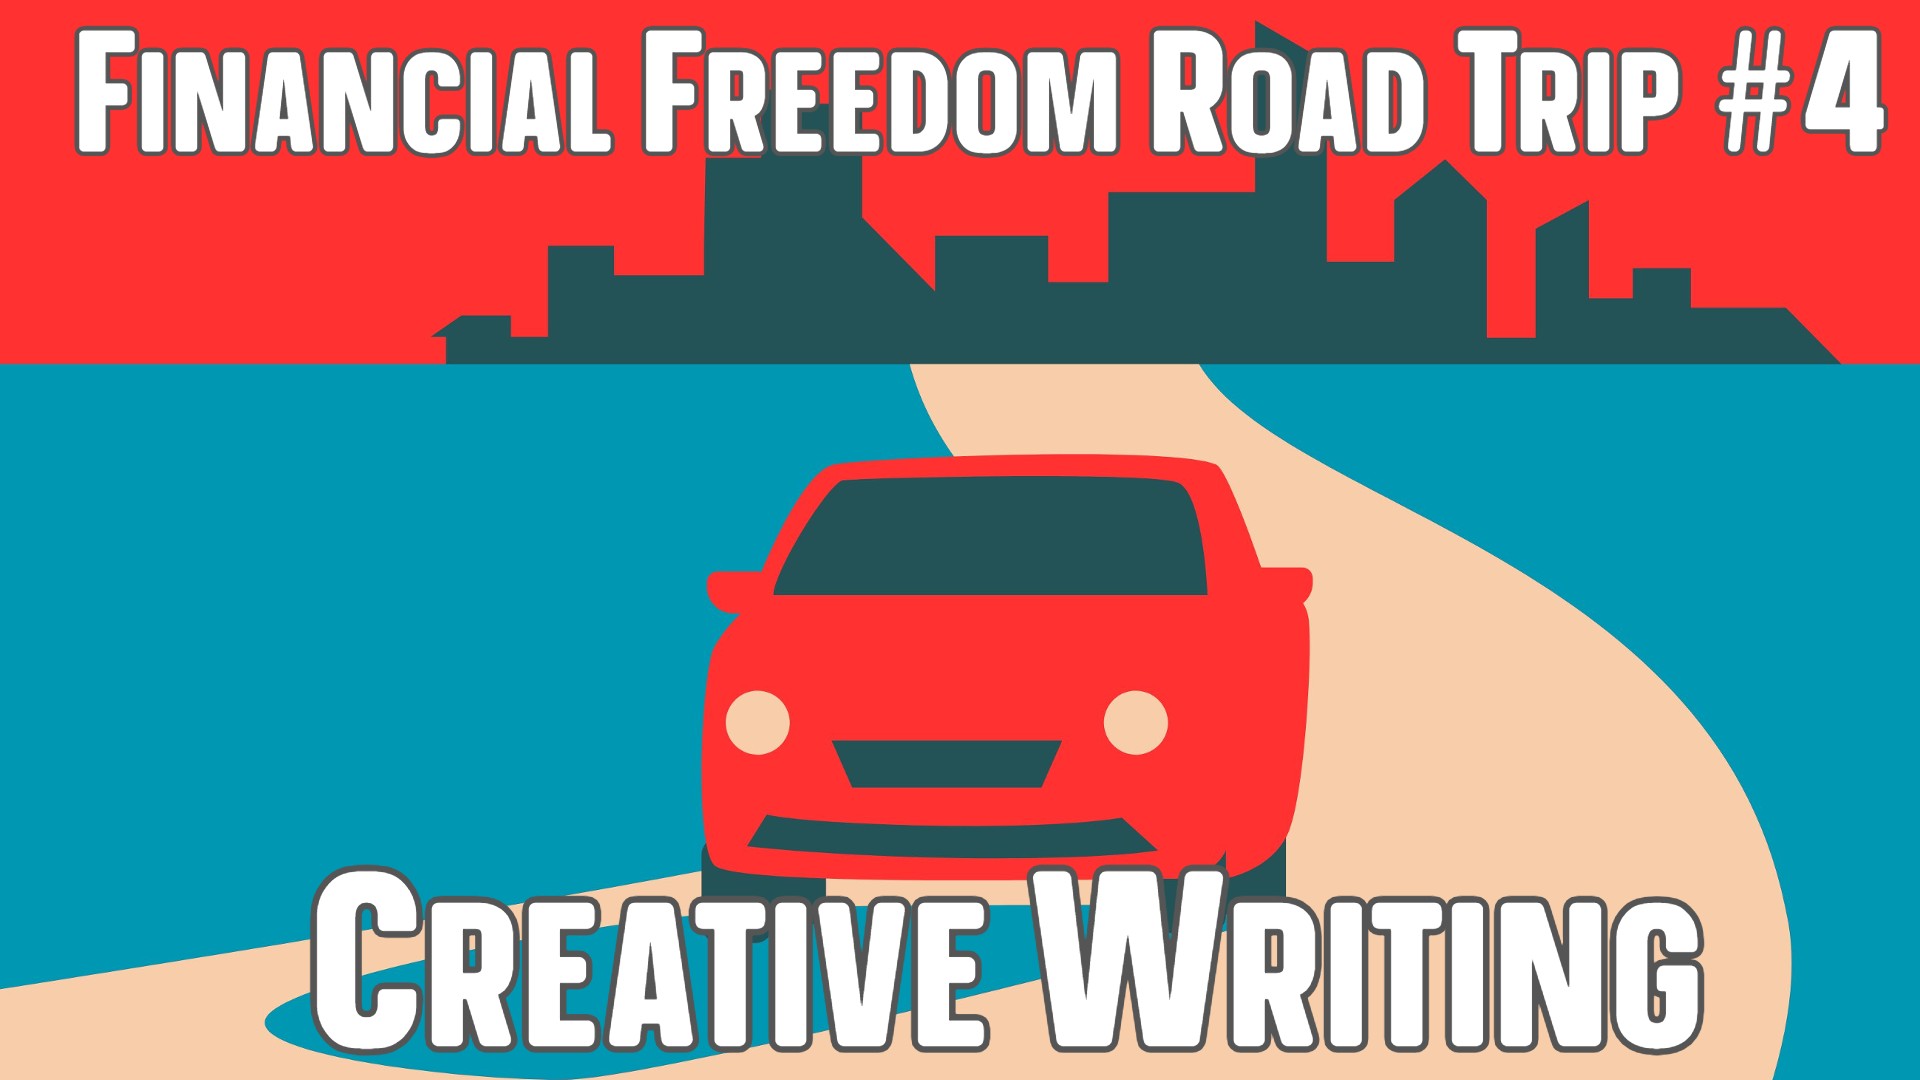 Financial Freedom Road Trip #4: Creative Writing